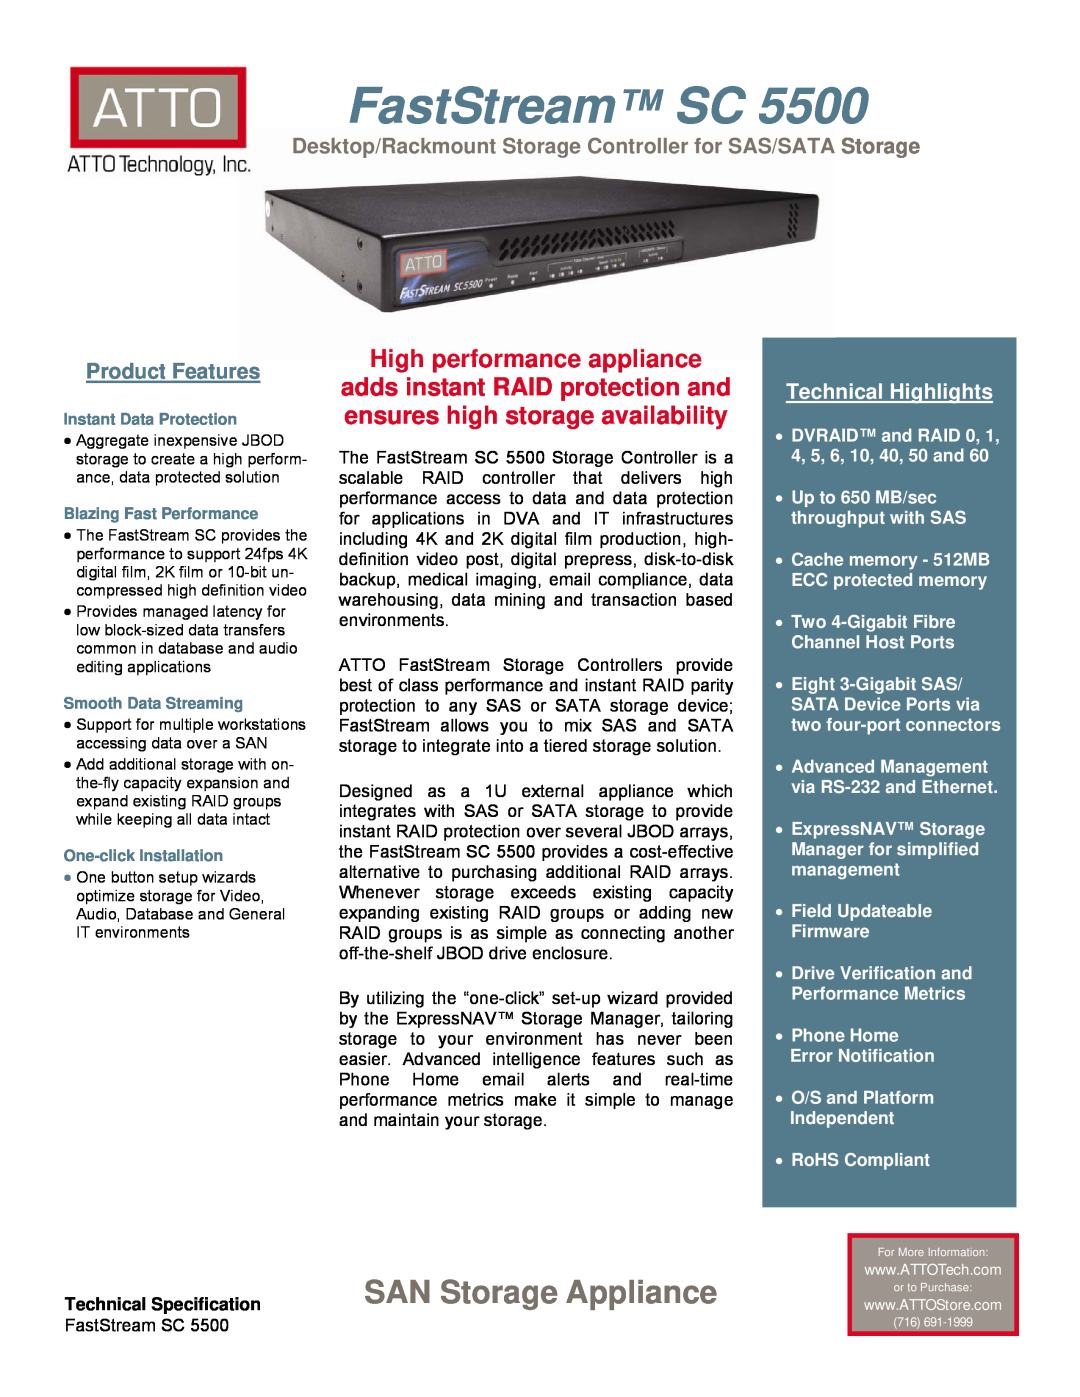 ATTO Technology SC 5500 manual Desktop/Rackmount Storage Controller for SAS/SATA Storage, Technical Specification 